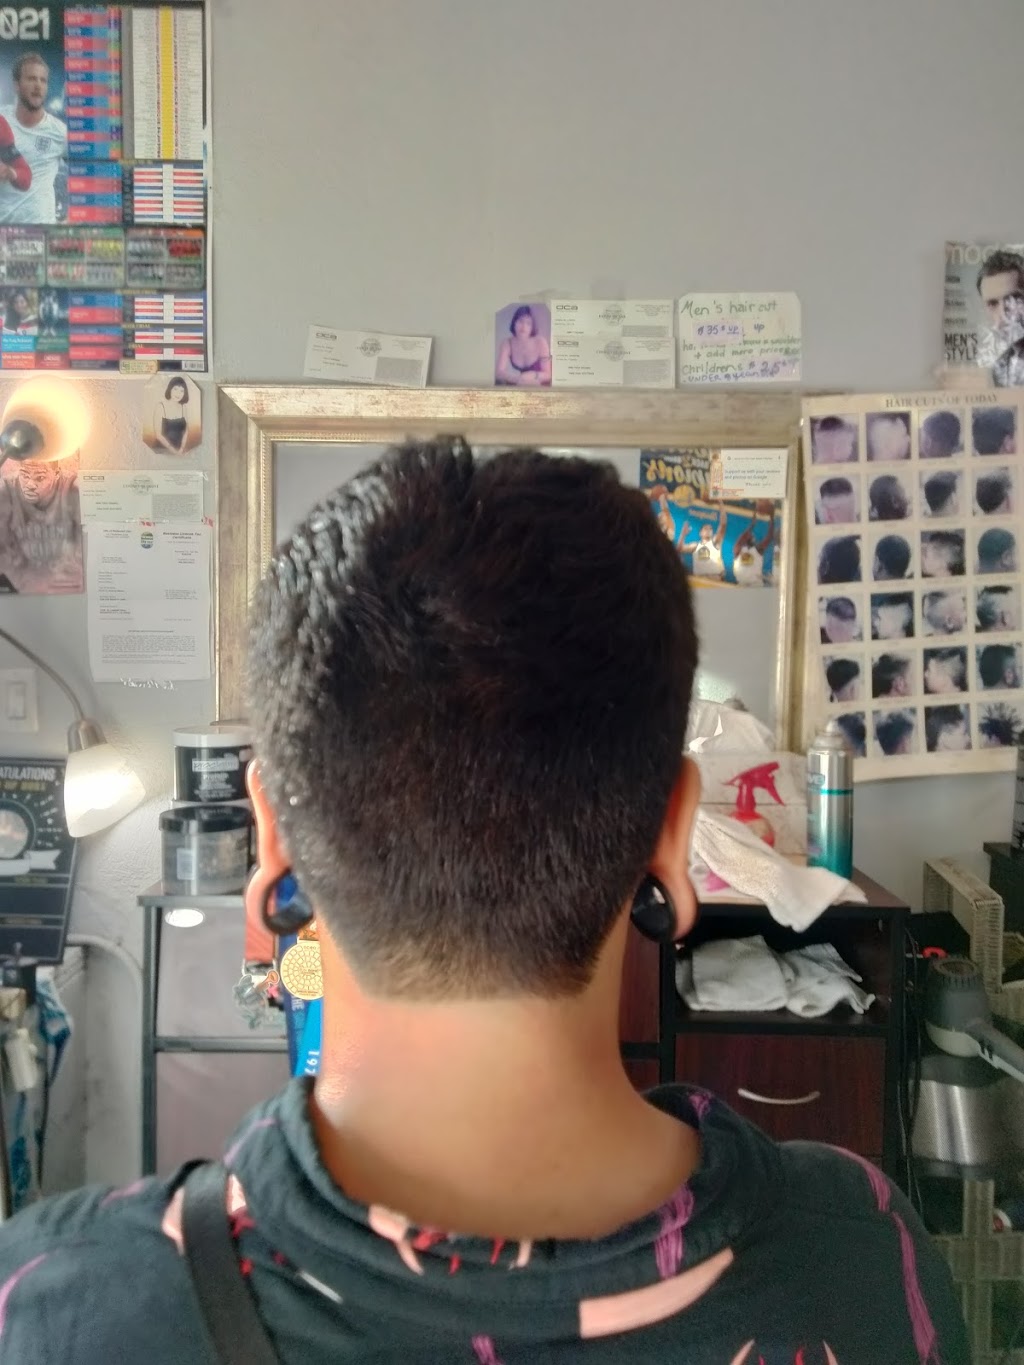 Anna Kim Chi Hair Salon & Barber | 2739 El Camino Real, Redwood City, CA 94061 | Phone: (650) 701-0274